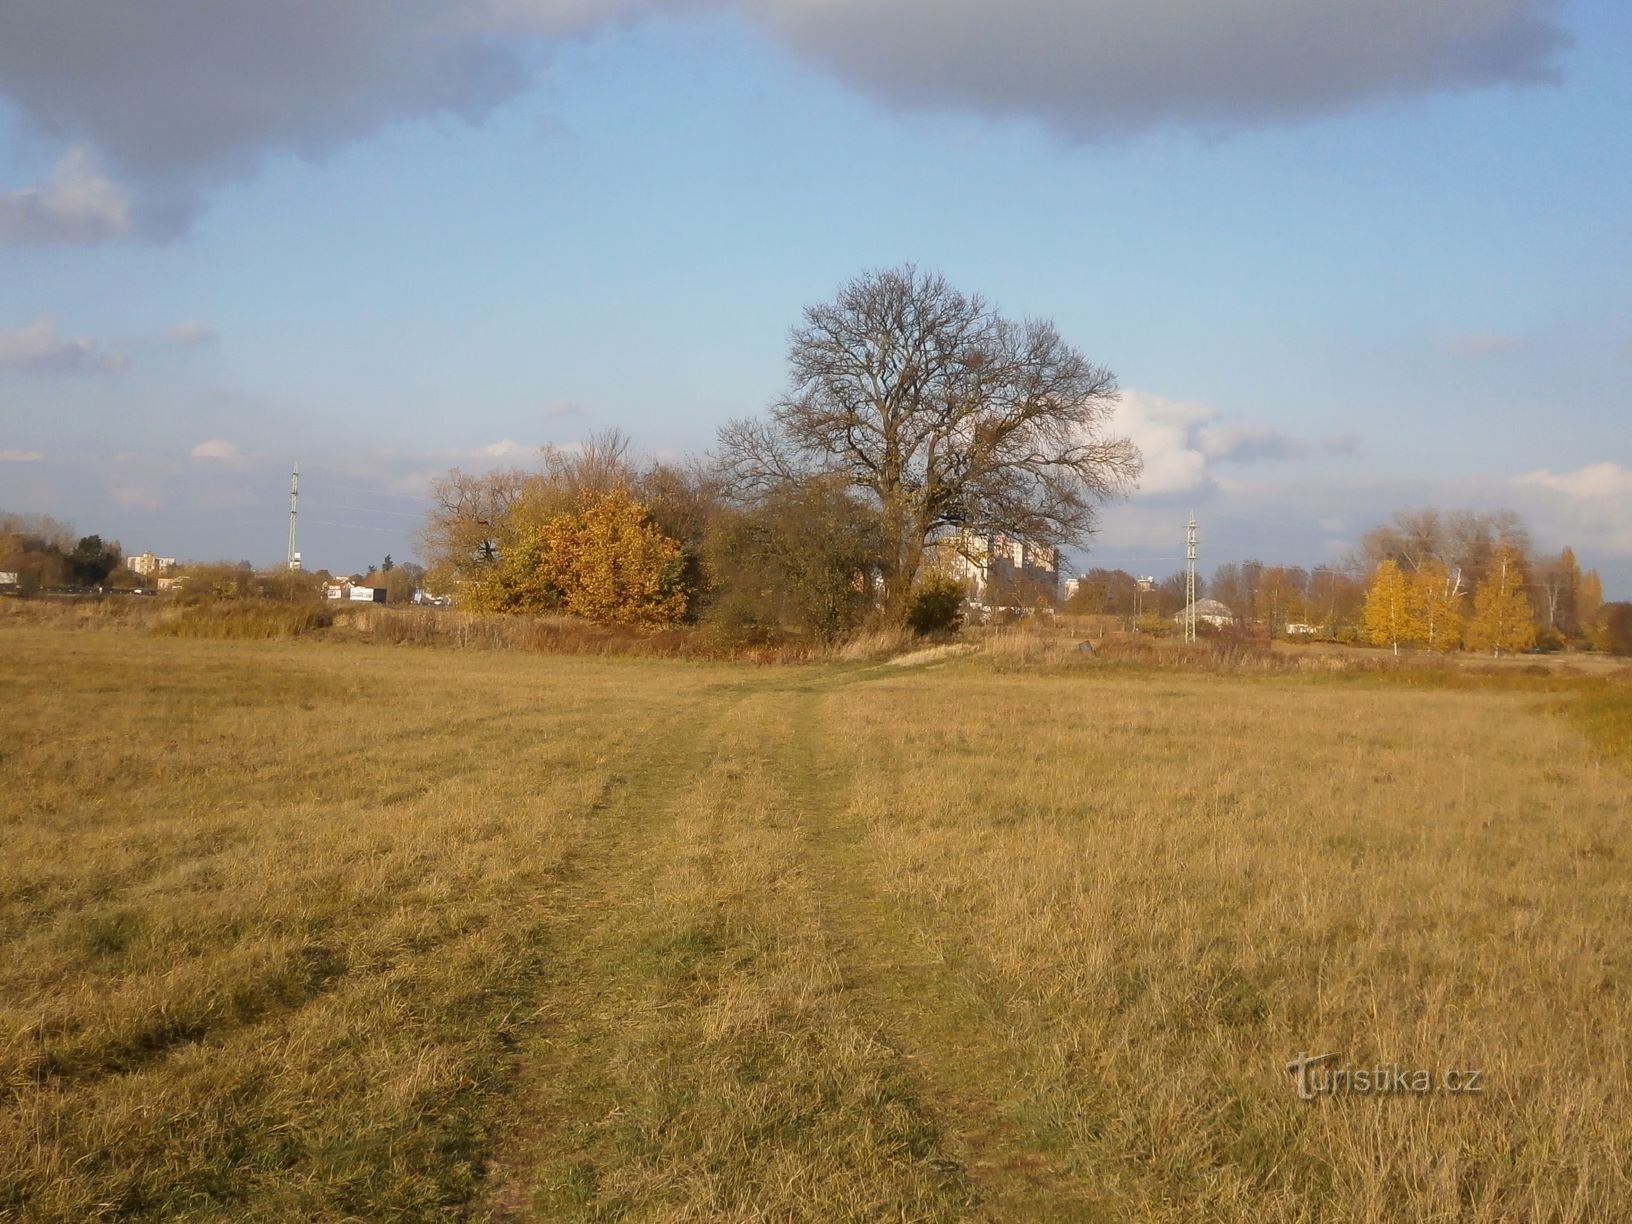 Puut lähellä Vlasačkaa (Hradec Králové, 9.11.2016. marraskuuta XNUMX)